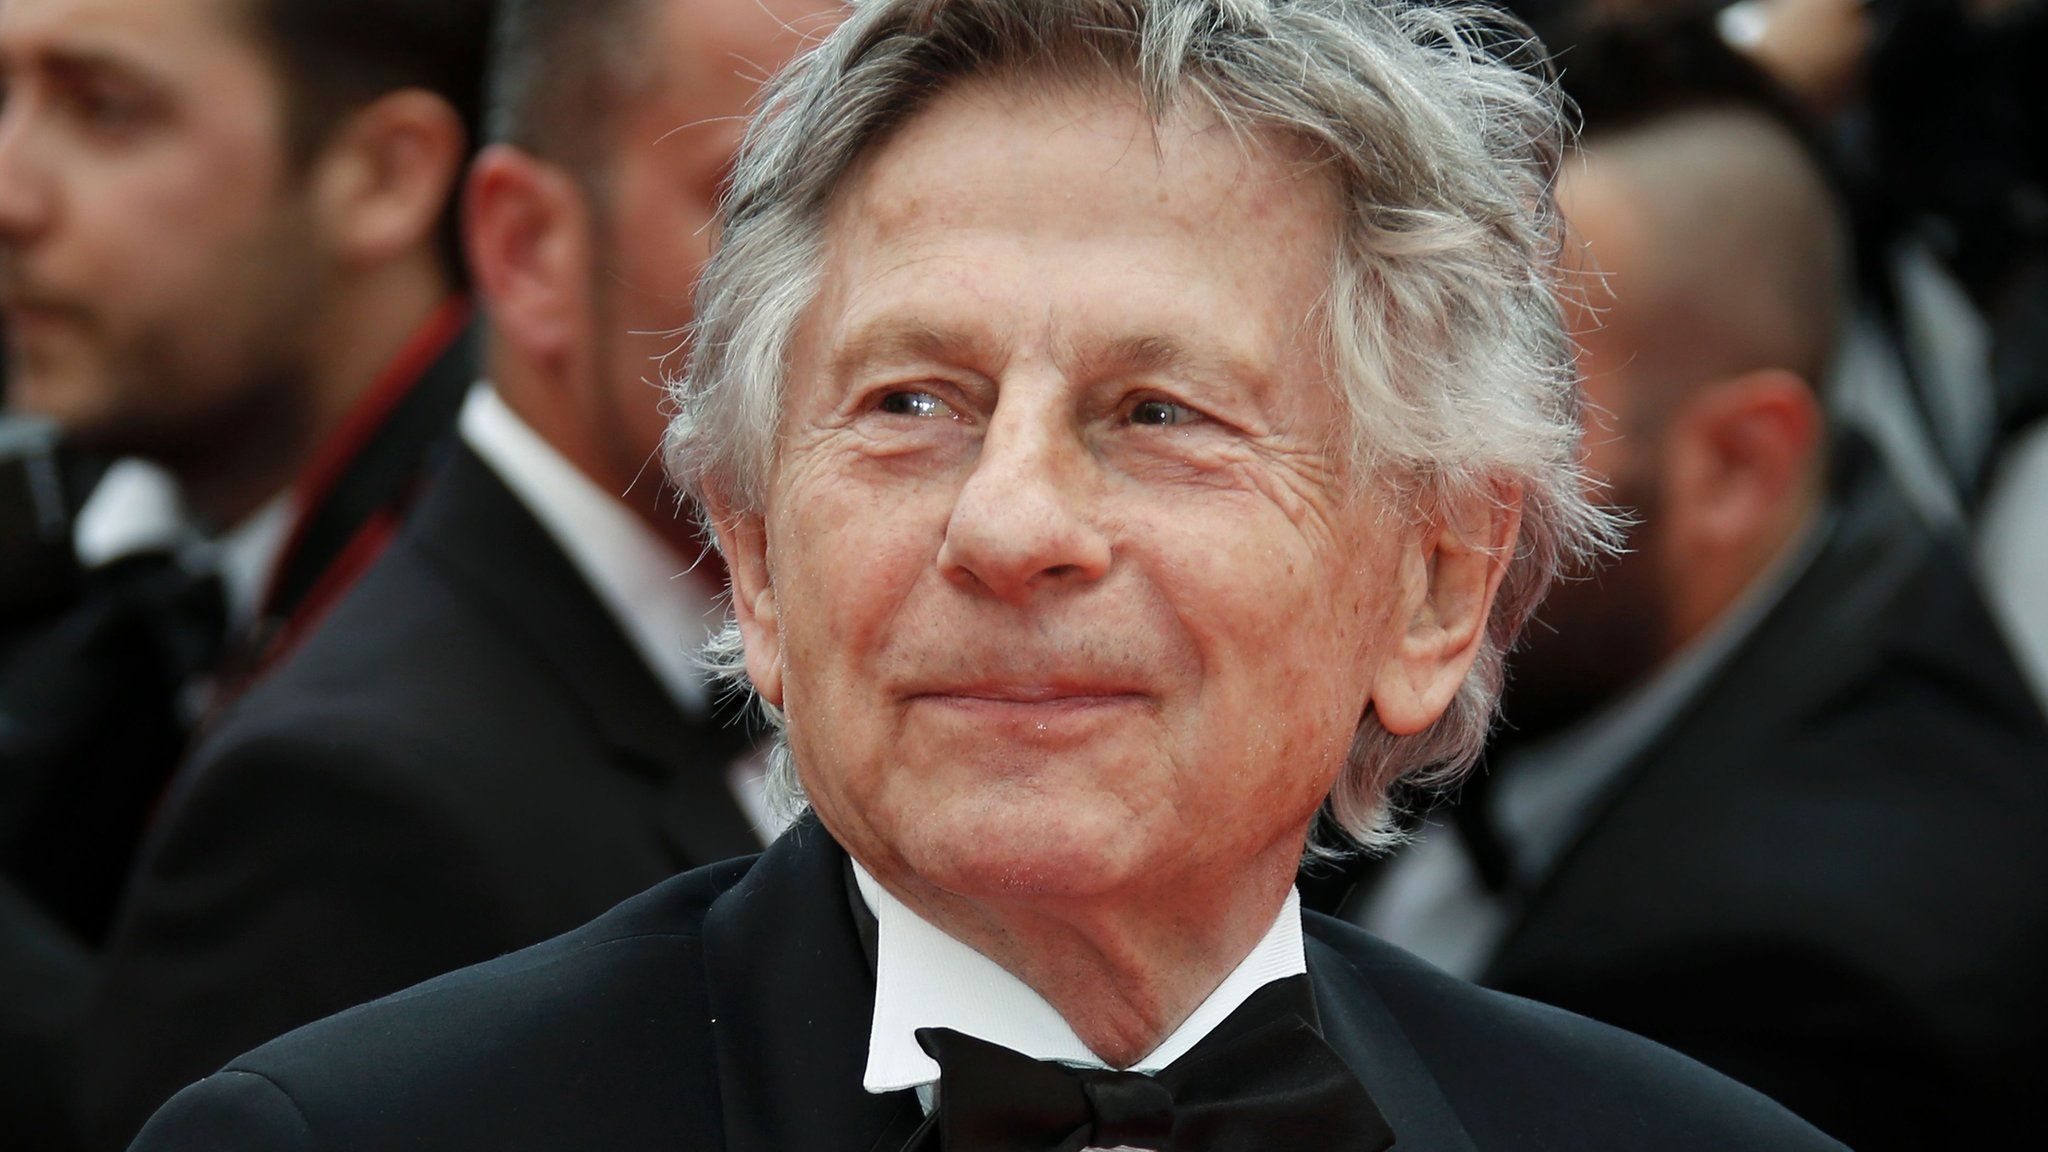 Roman Polanski at the Cannes Film Festival in 2014